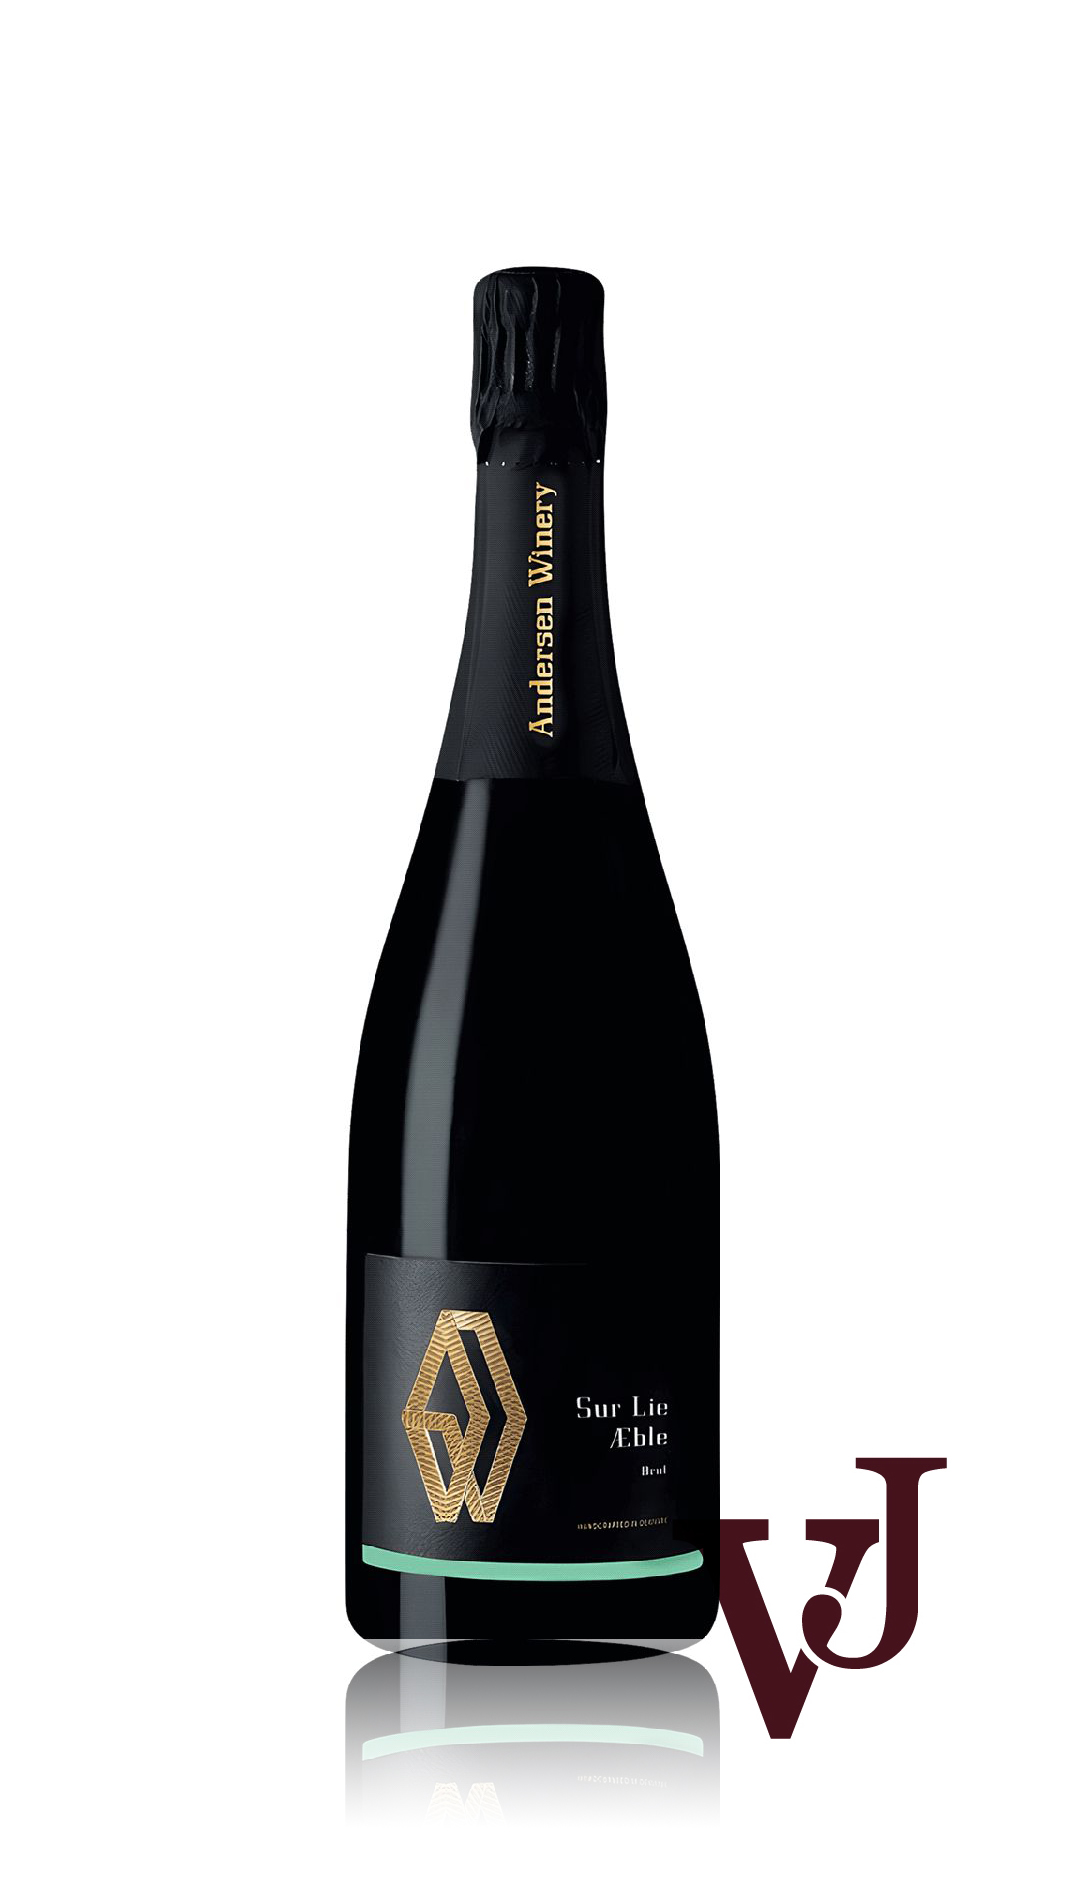 Mousserande Vin - Sur Lie Mousserande Äppelvin 2021 artikel nummer 7308701 från producenten Andersen Winery från Danmark.